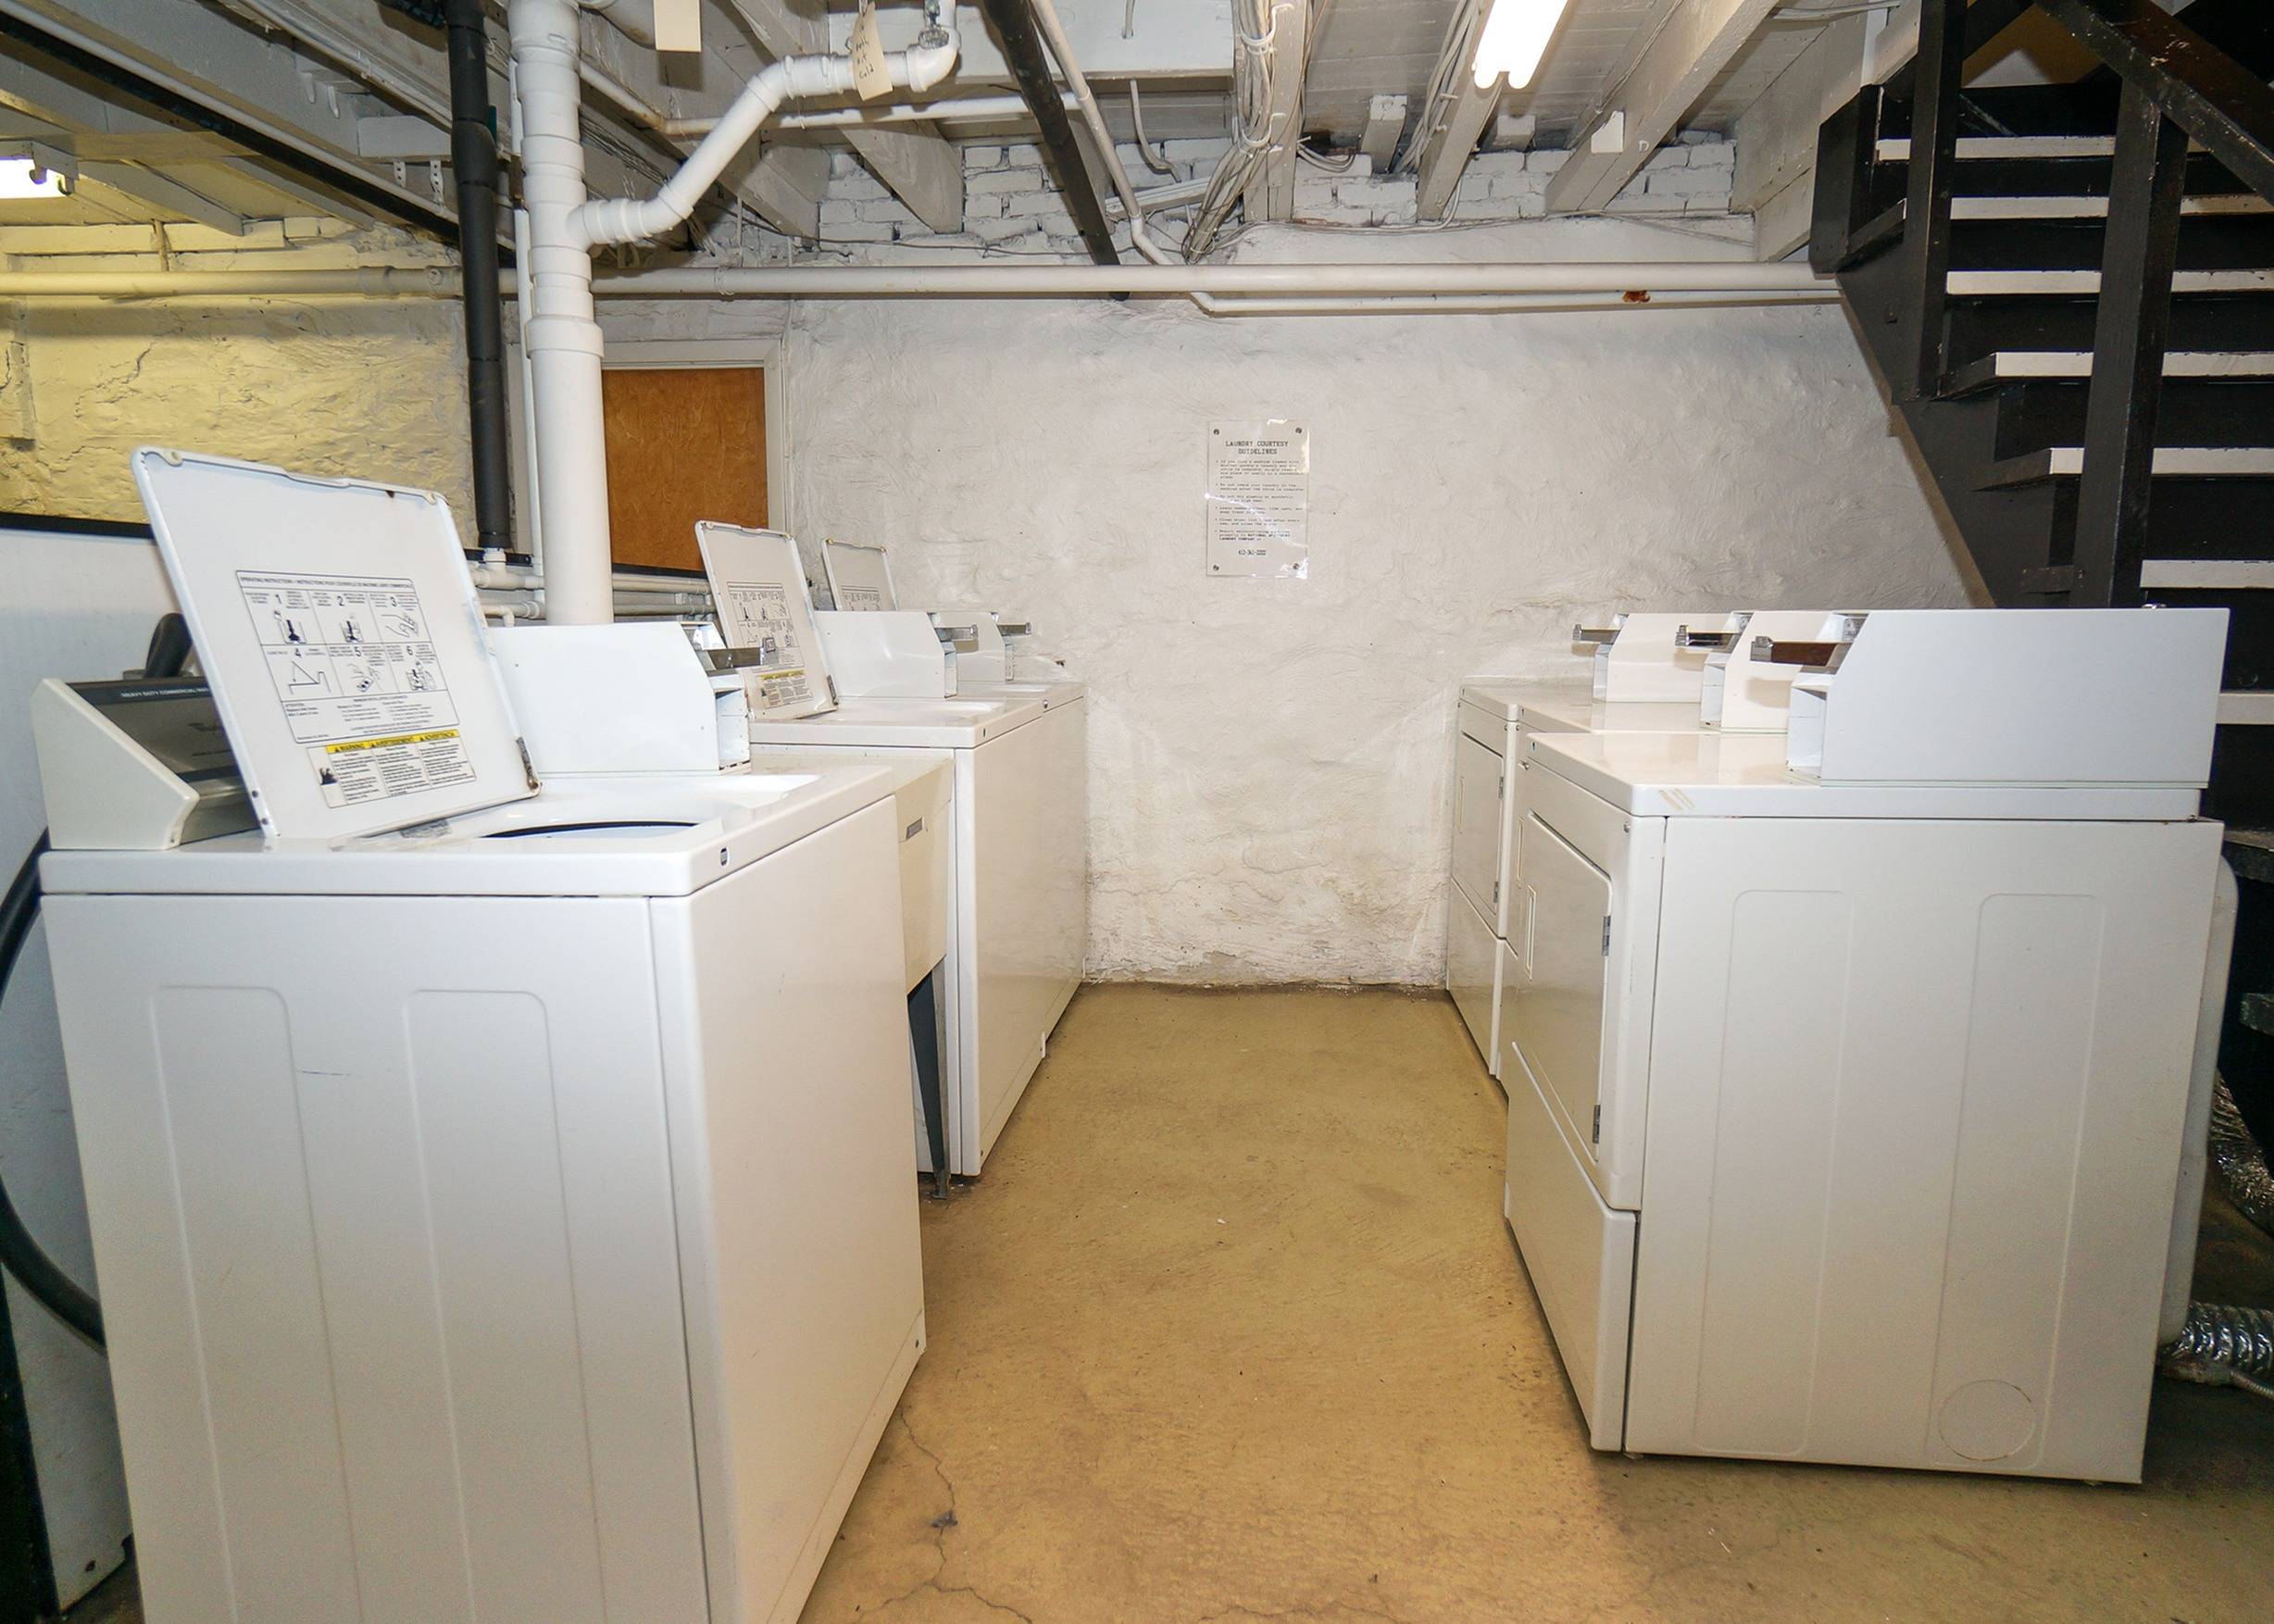 Laundry facility at the Nevilletree building